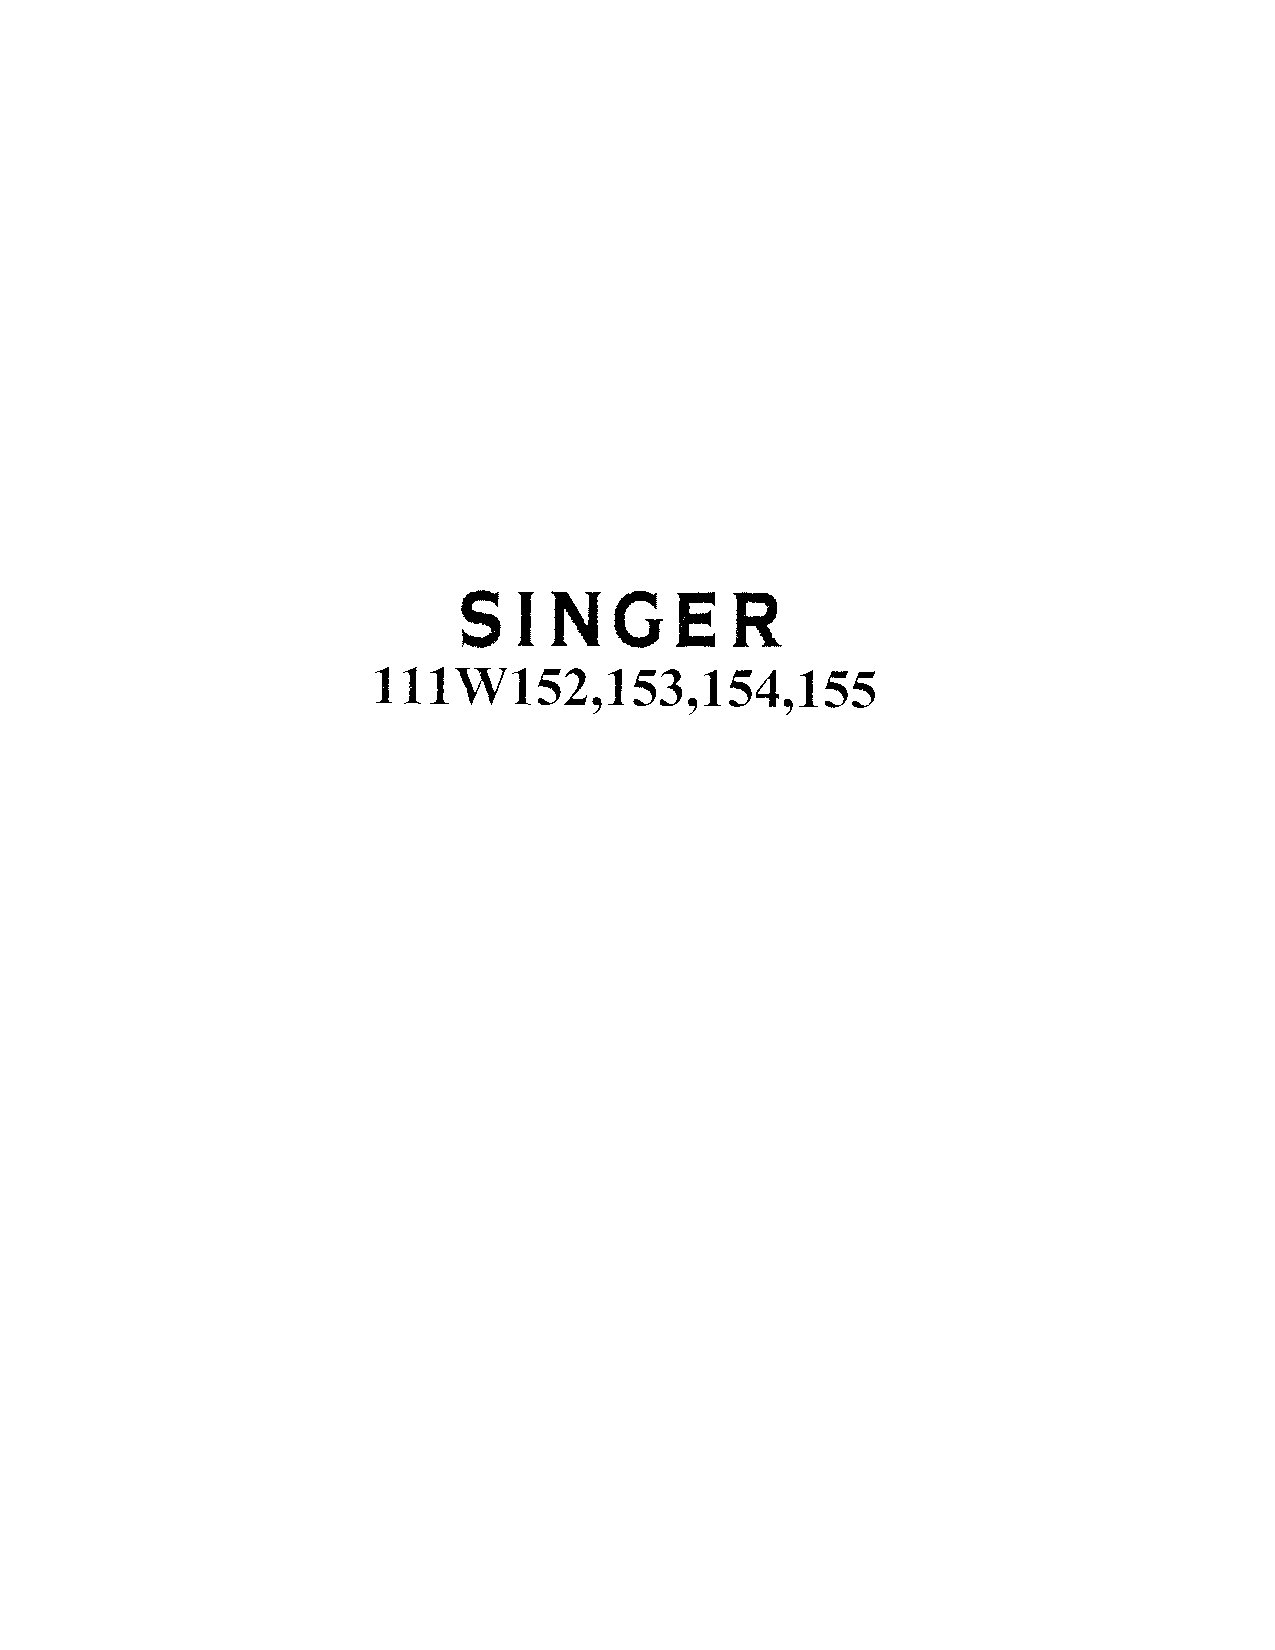 Singer 111W155, 111W153, 111W154, 111W152 User Manual